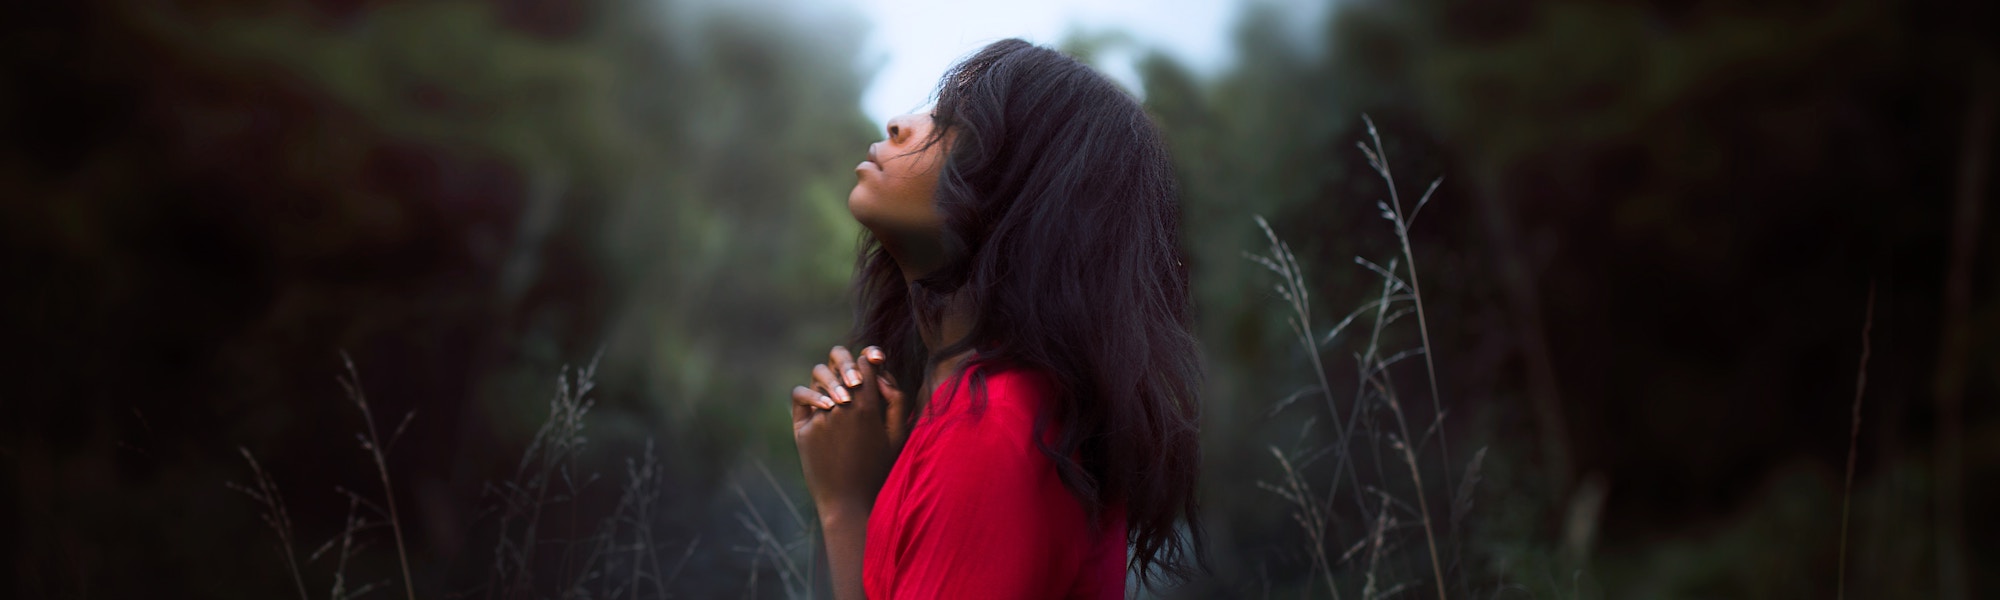 Woman standing amongst trees praying illustrating transforming your prayer life